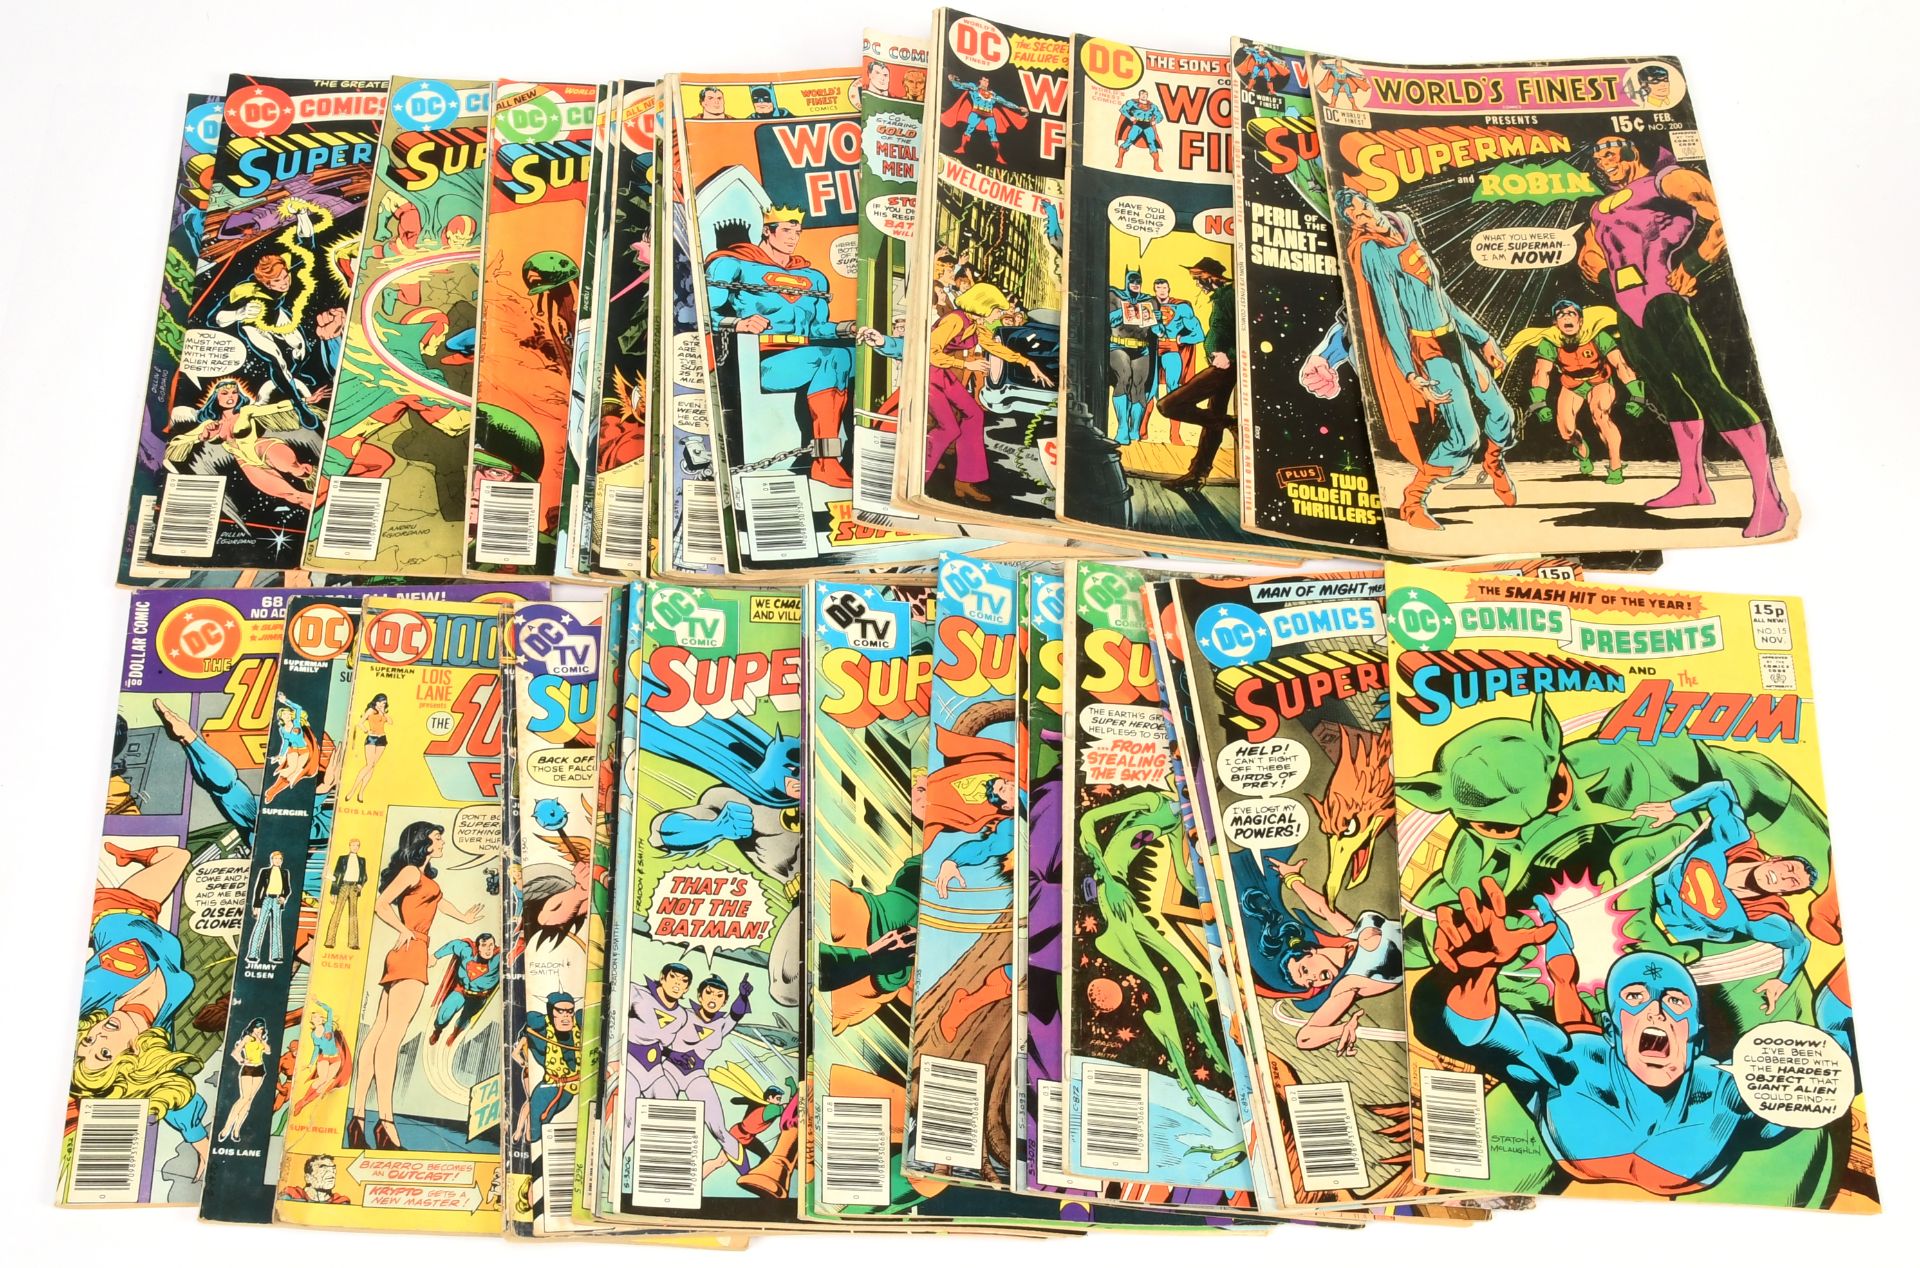 Quantity of DC Comics Silver and Bronze Age Superman related comics x 6